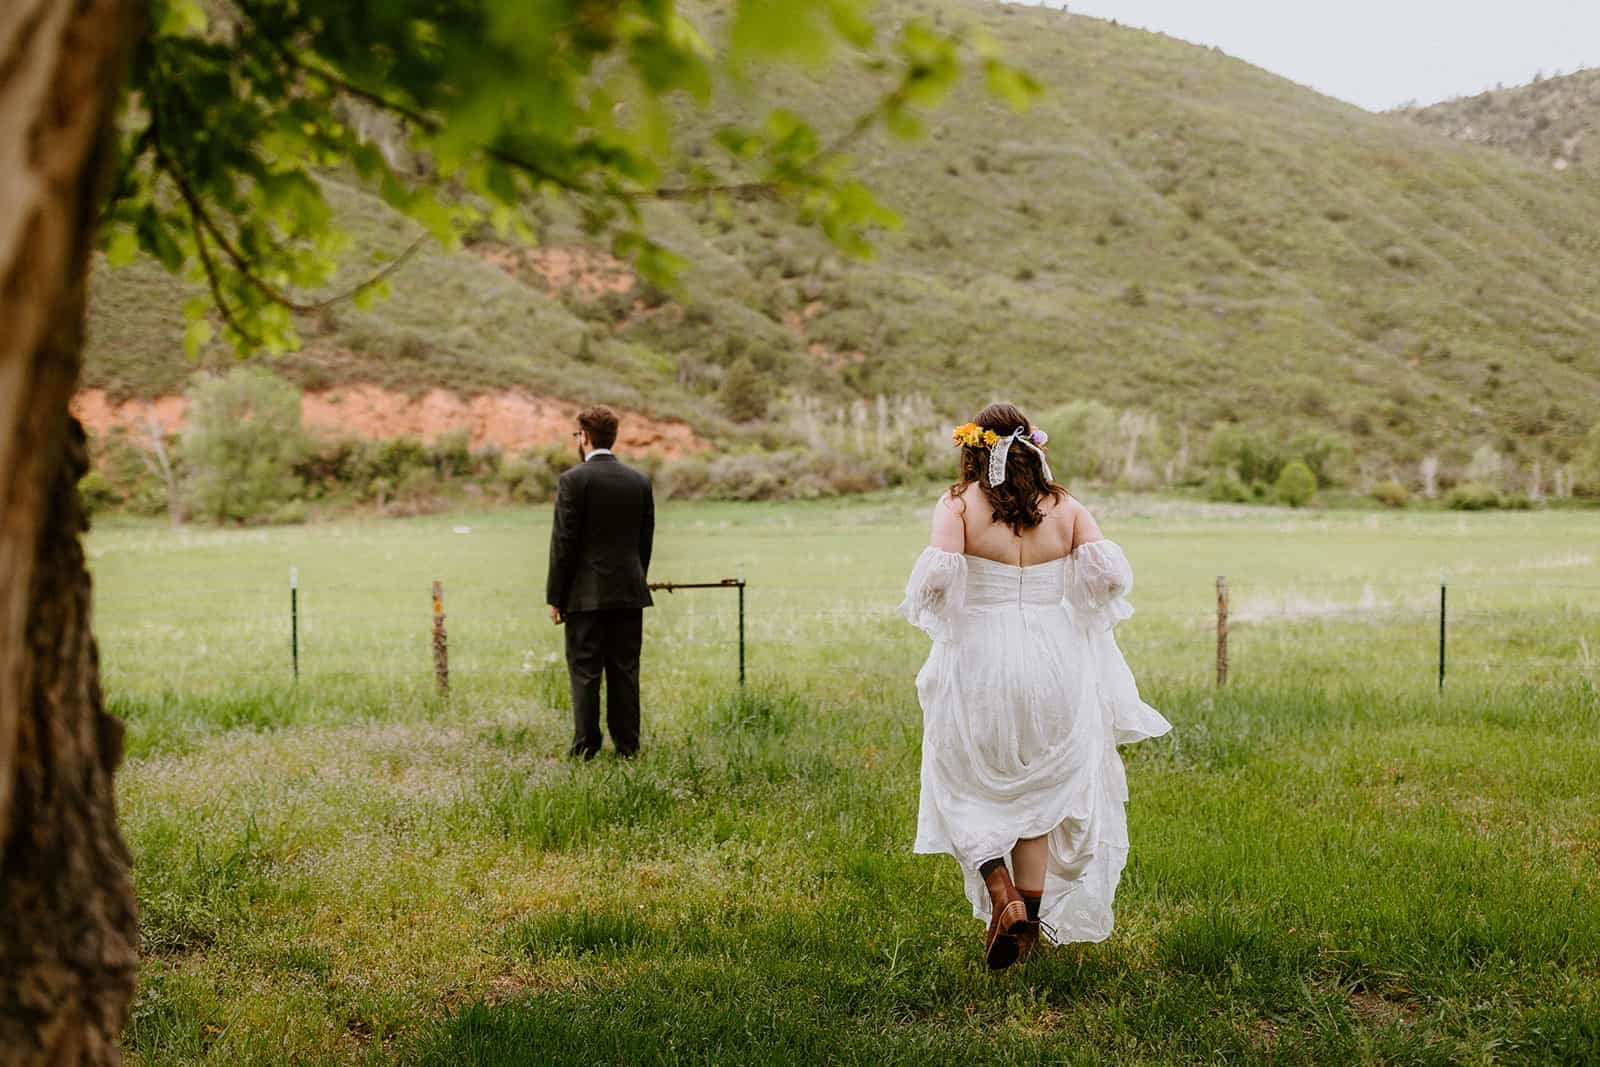 A woman in a wedding dress walks toward a man whose back is toward her